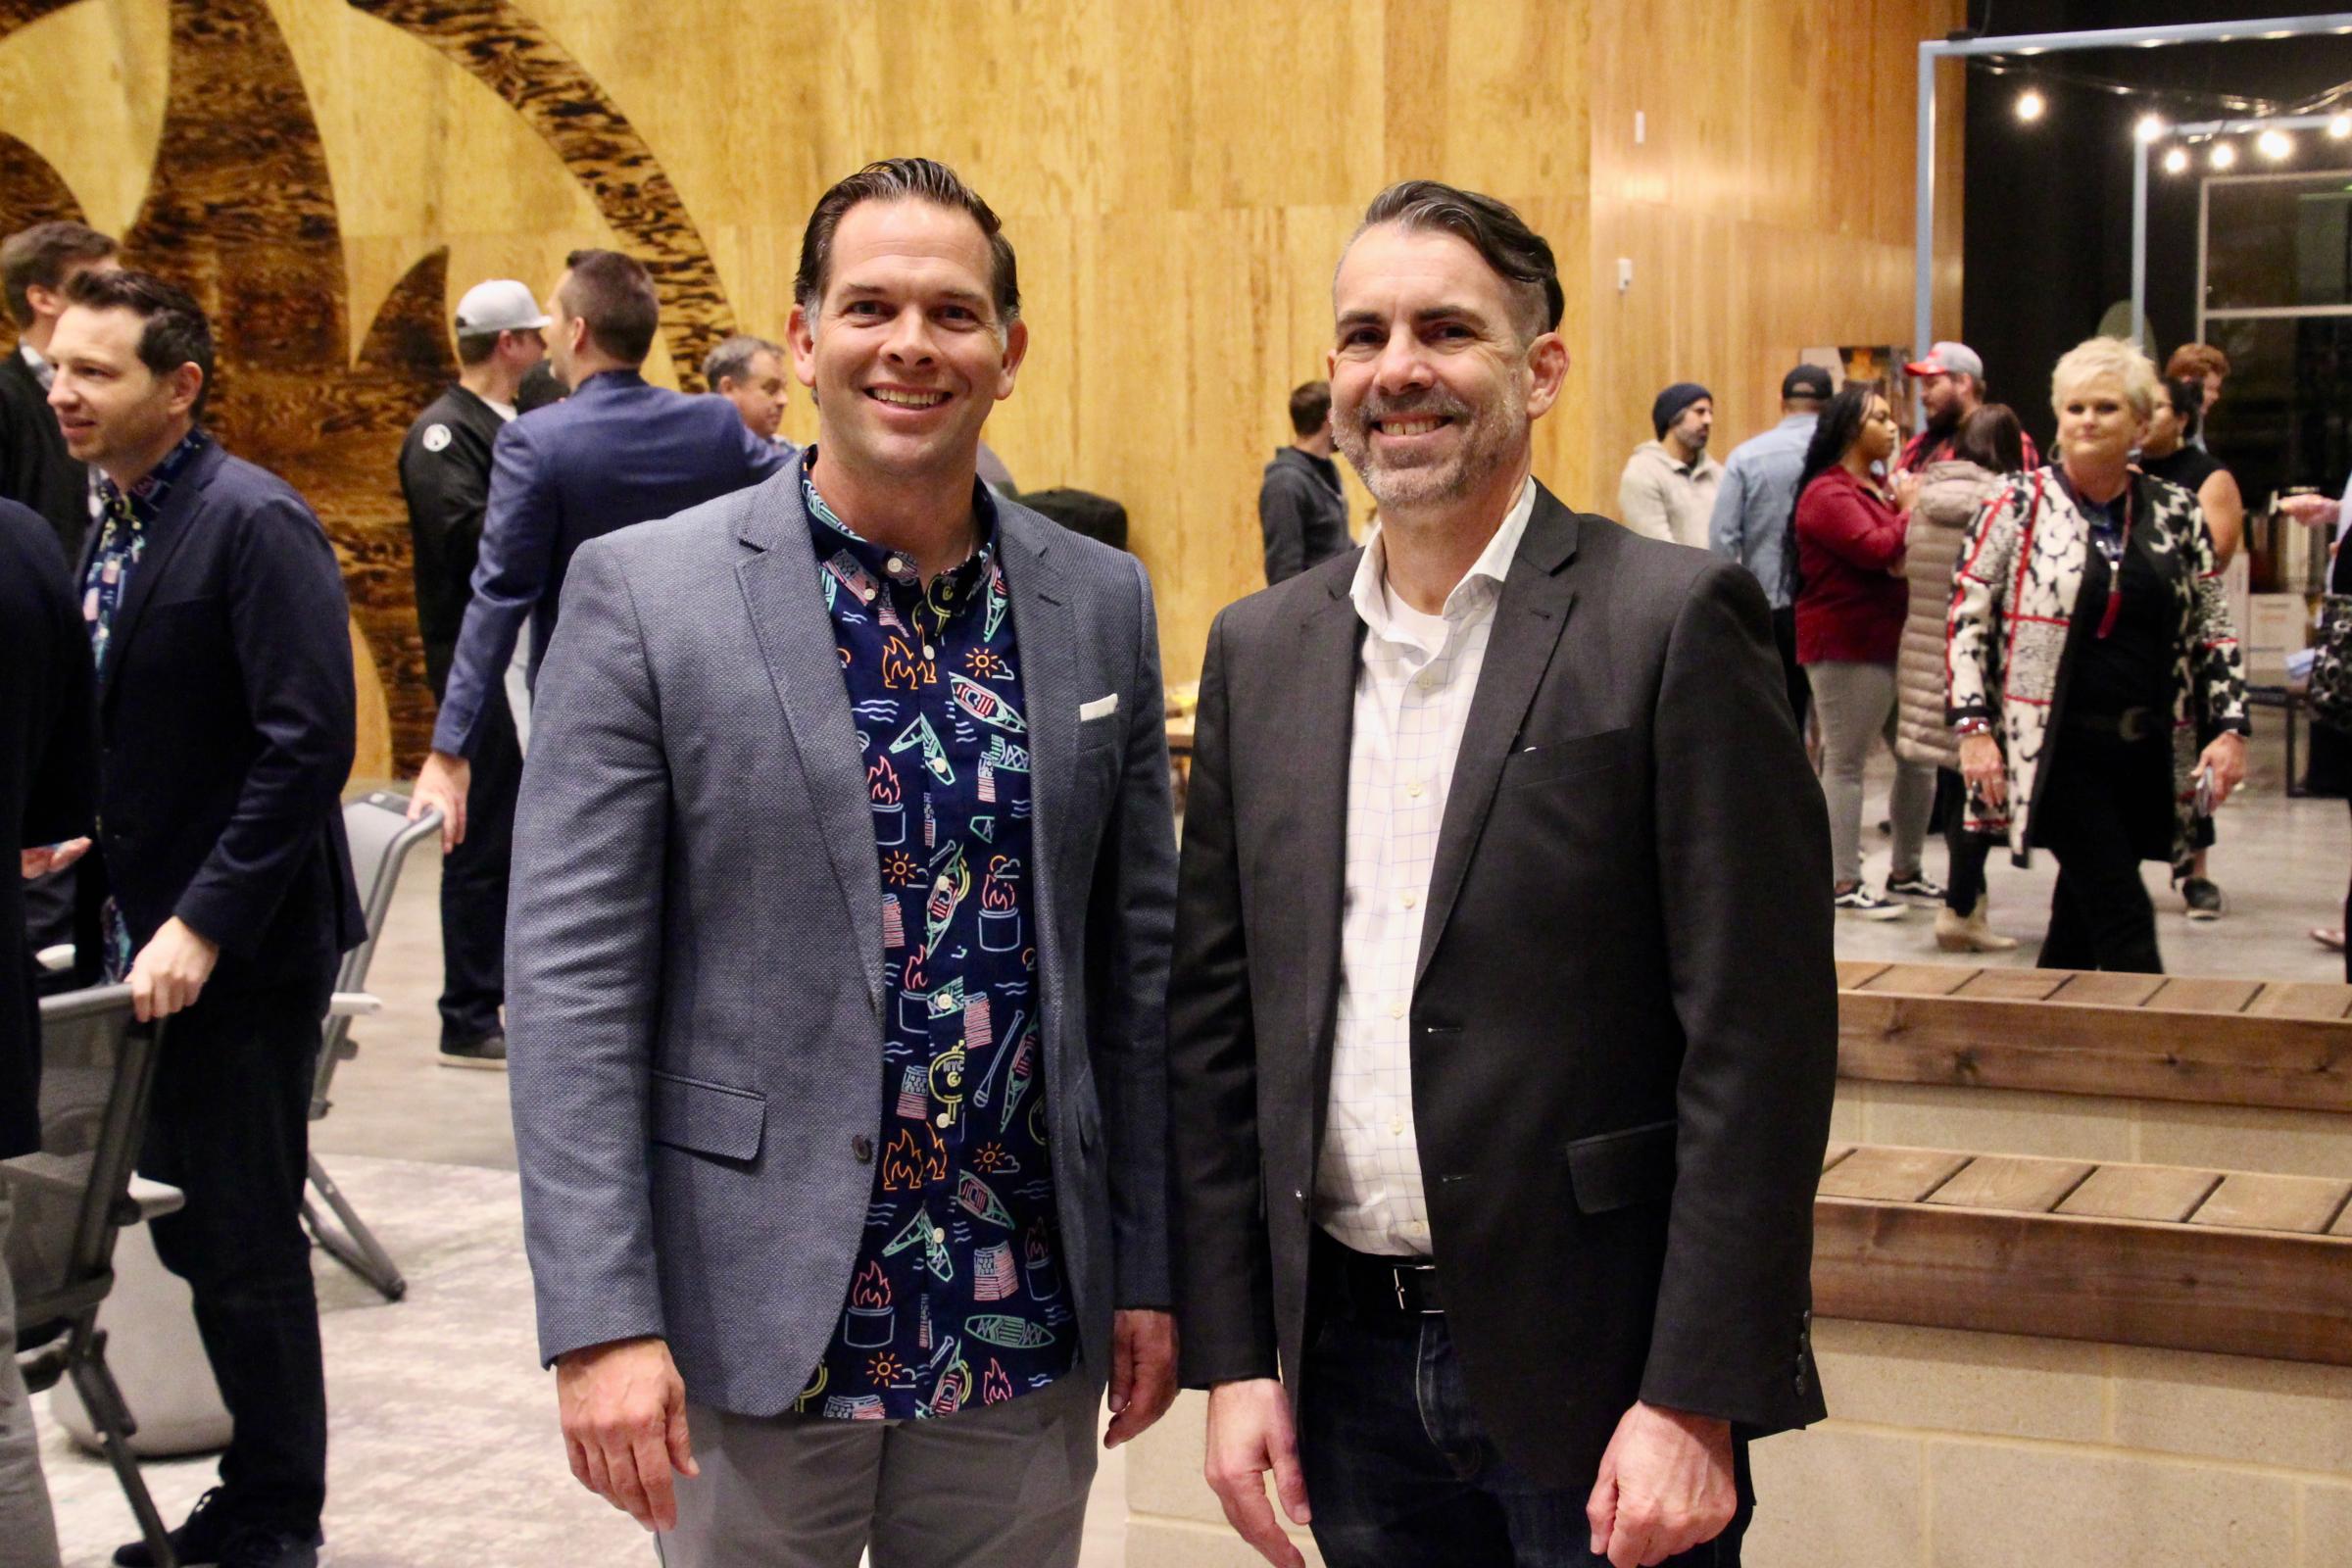 Solo Brands CEO John Merris (left) and Grapevine Economic Development Director Larry Holt (right) celebrate the company's ribbon cutting in Grapevine